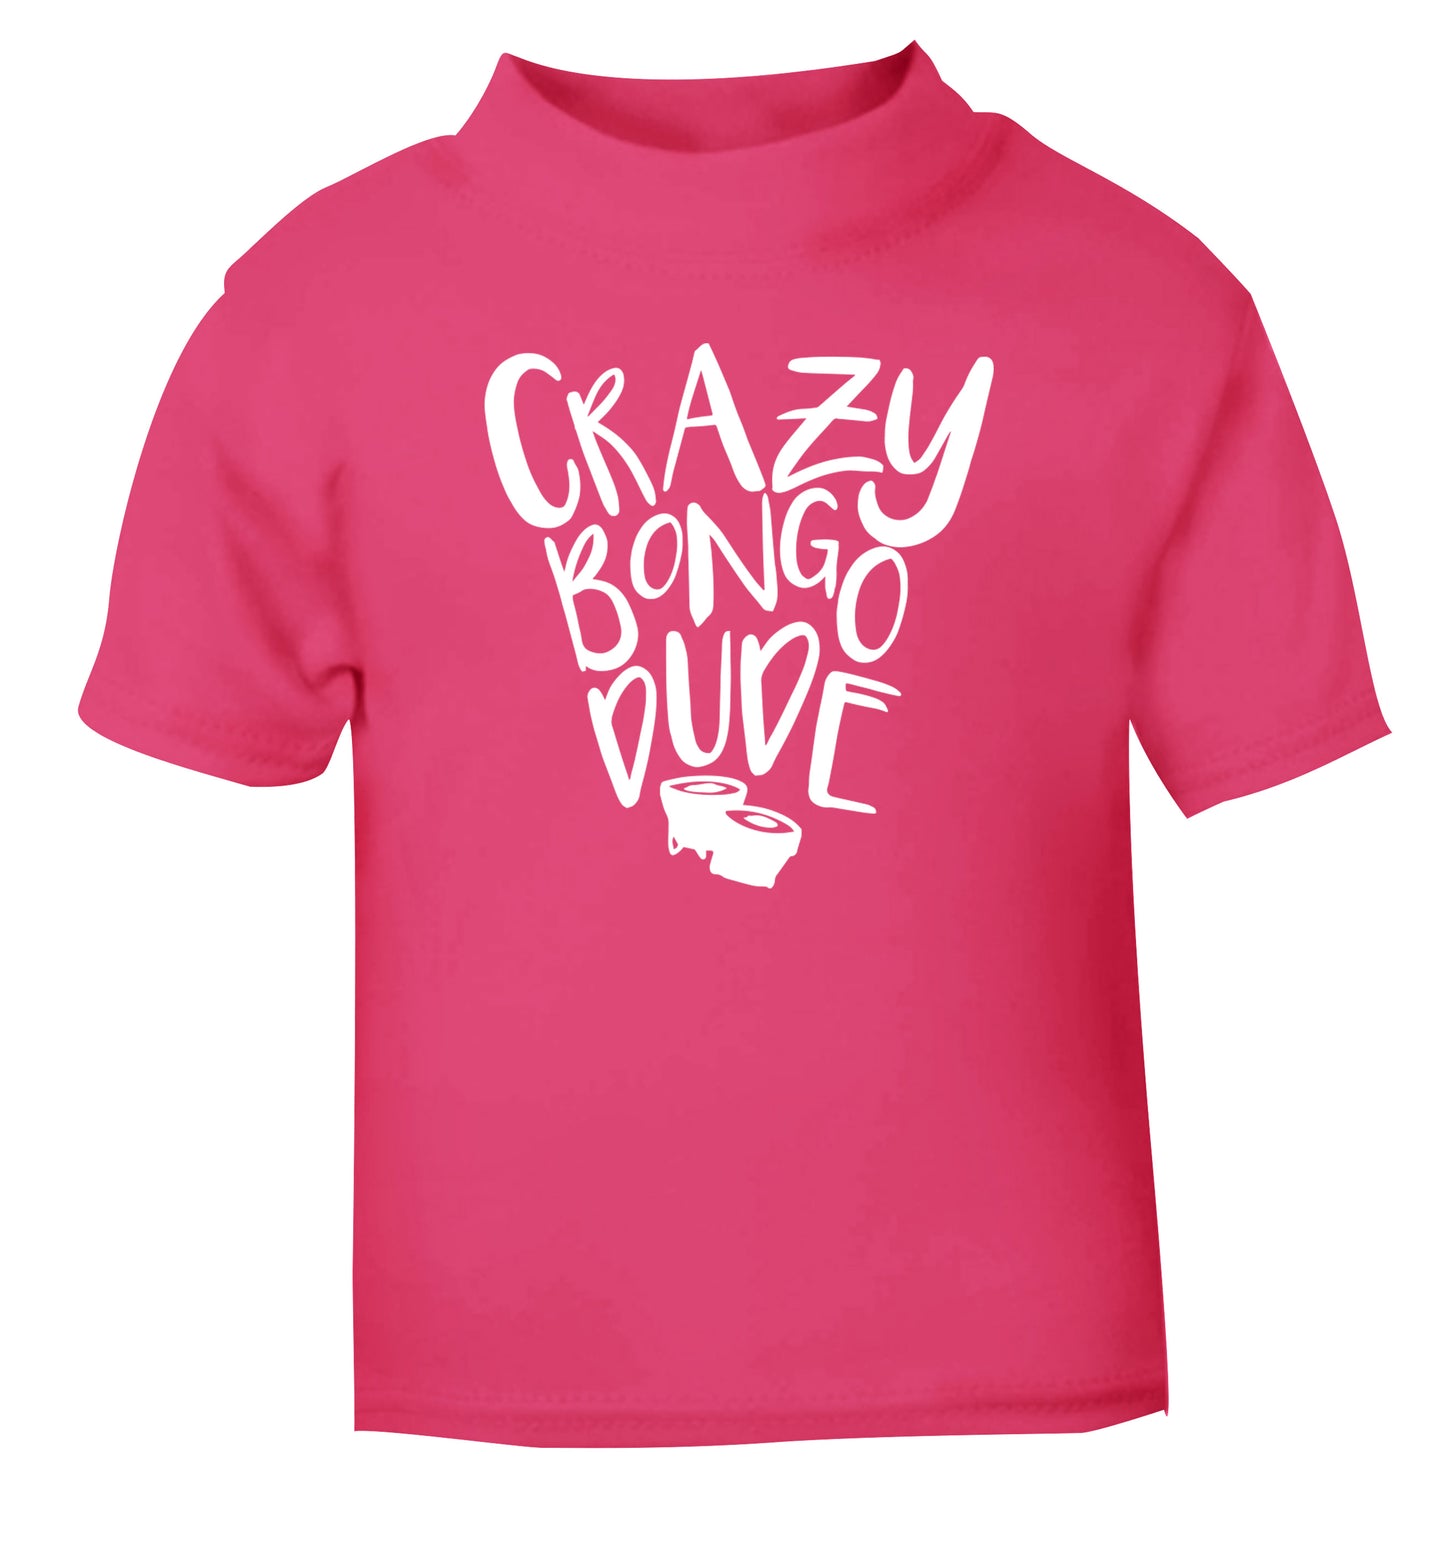 Crazy bongo dude pink Baby Toddler Tshirt 2 Years